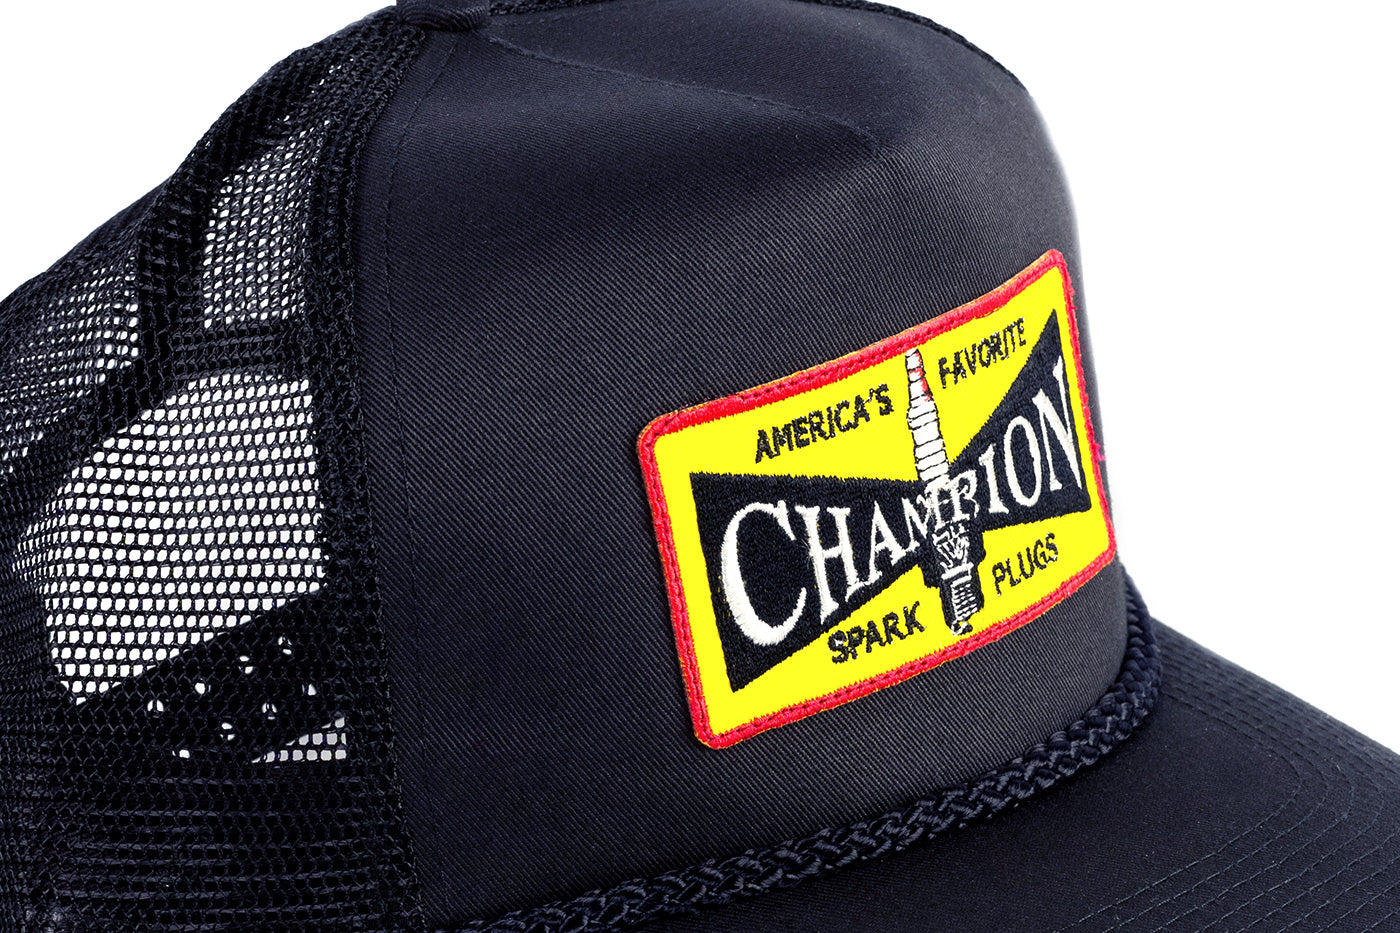 champion spark plugs hat